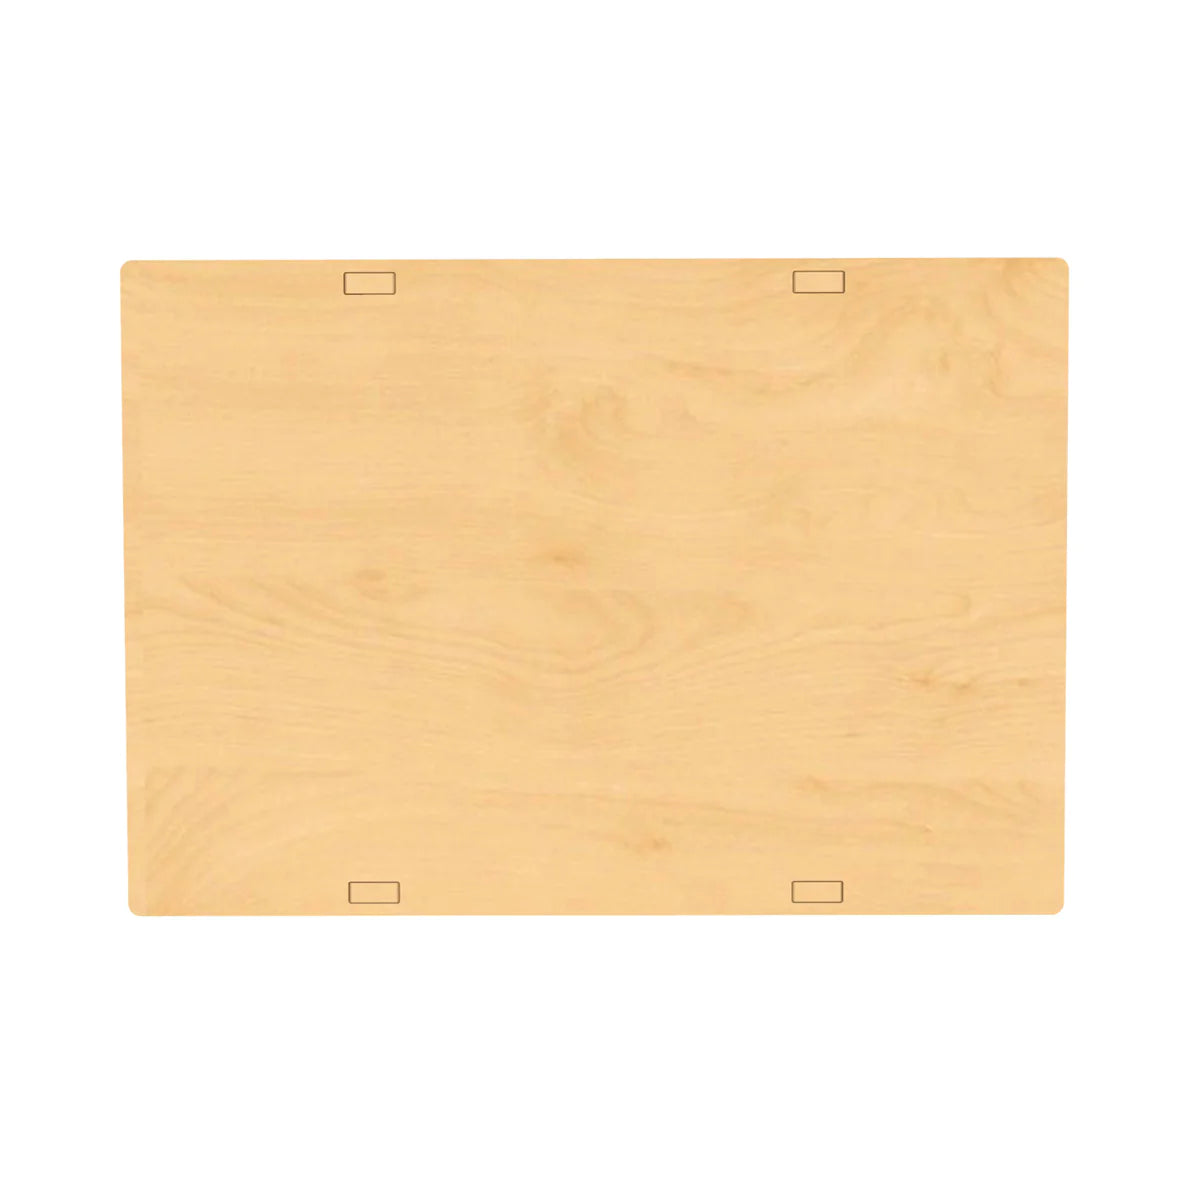 Buy Black Kiwi Wooden Table - Natural - Upper View - SkilloToys.com